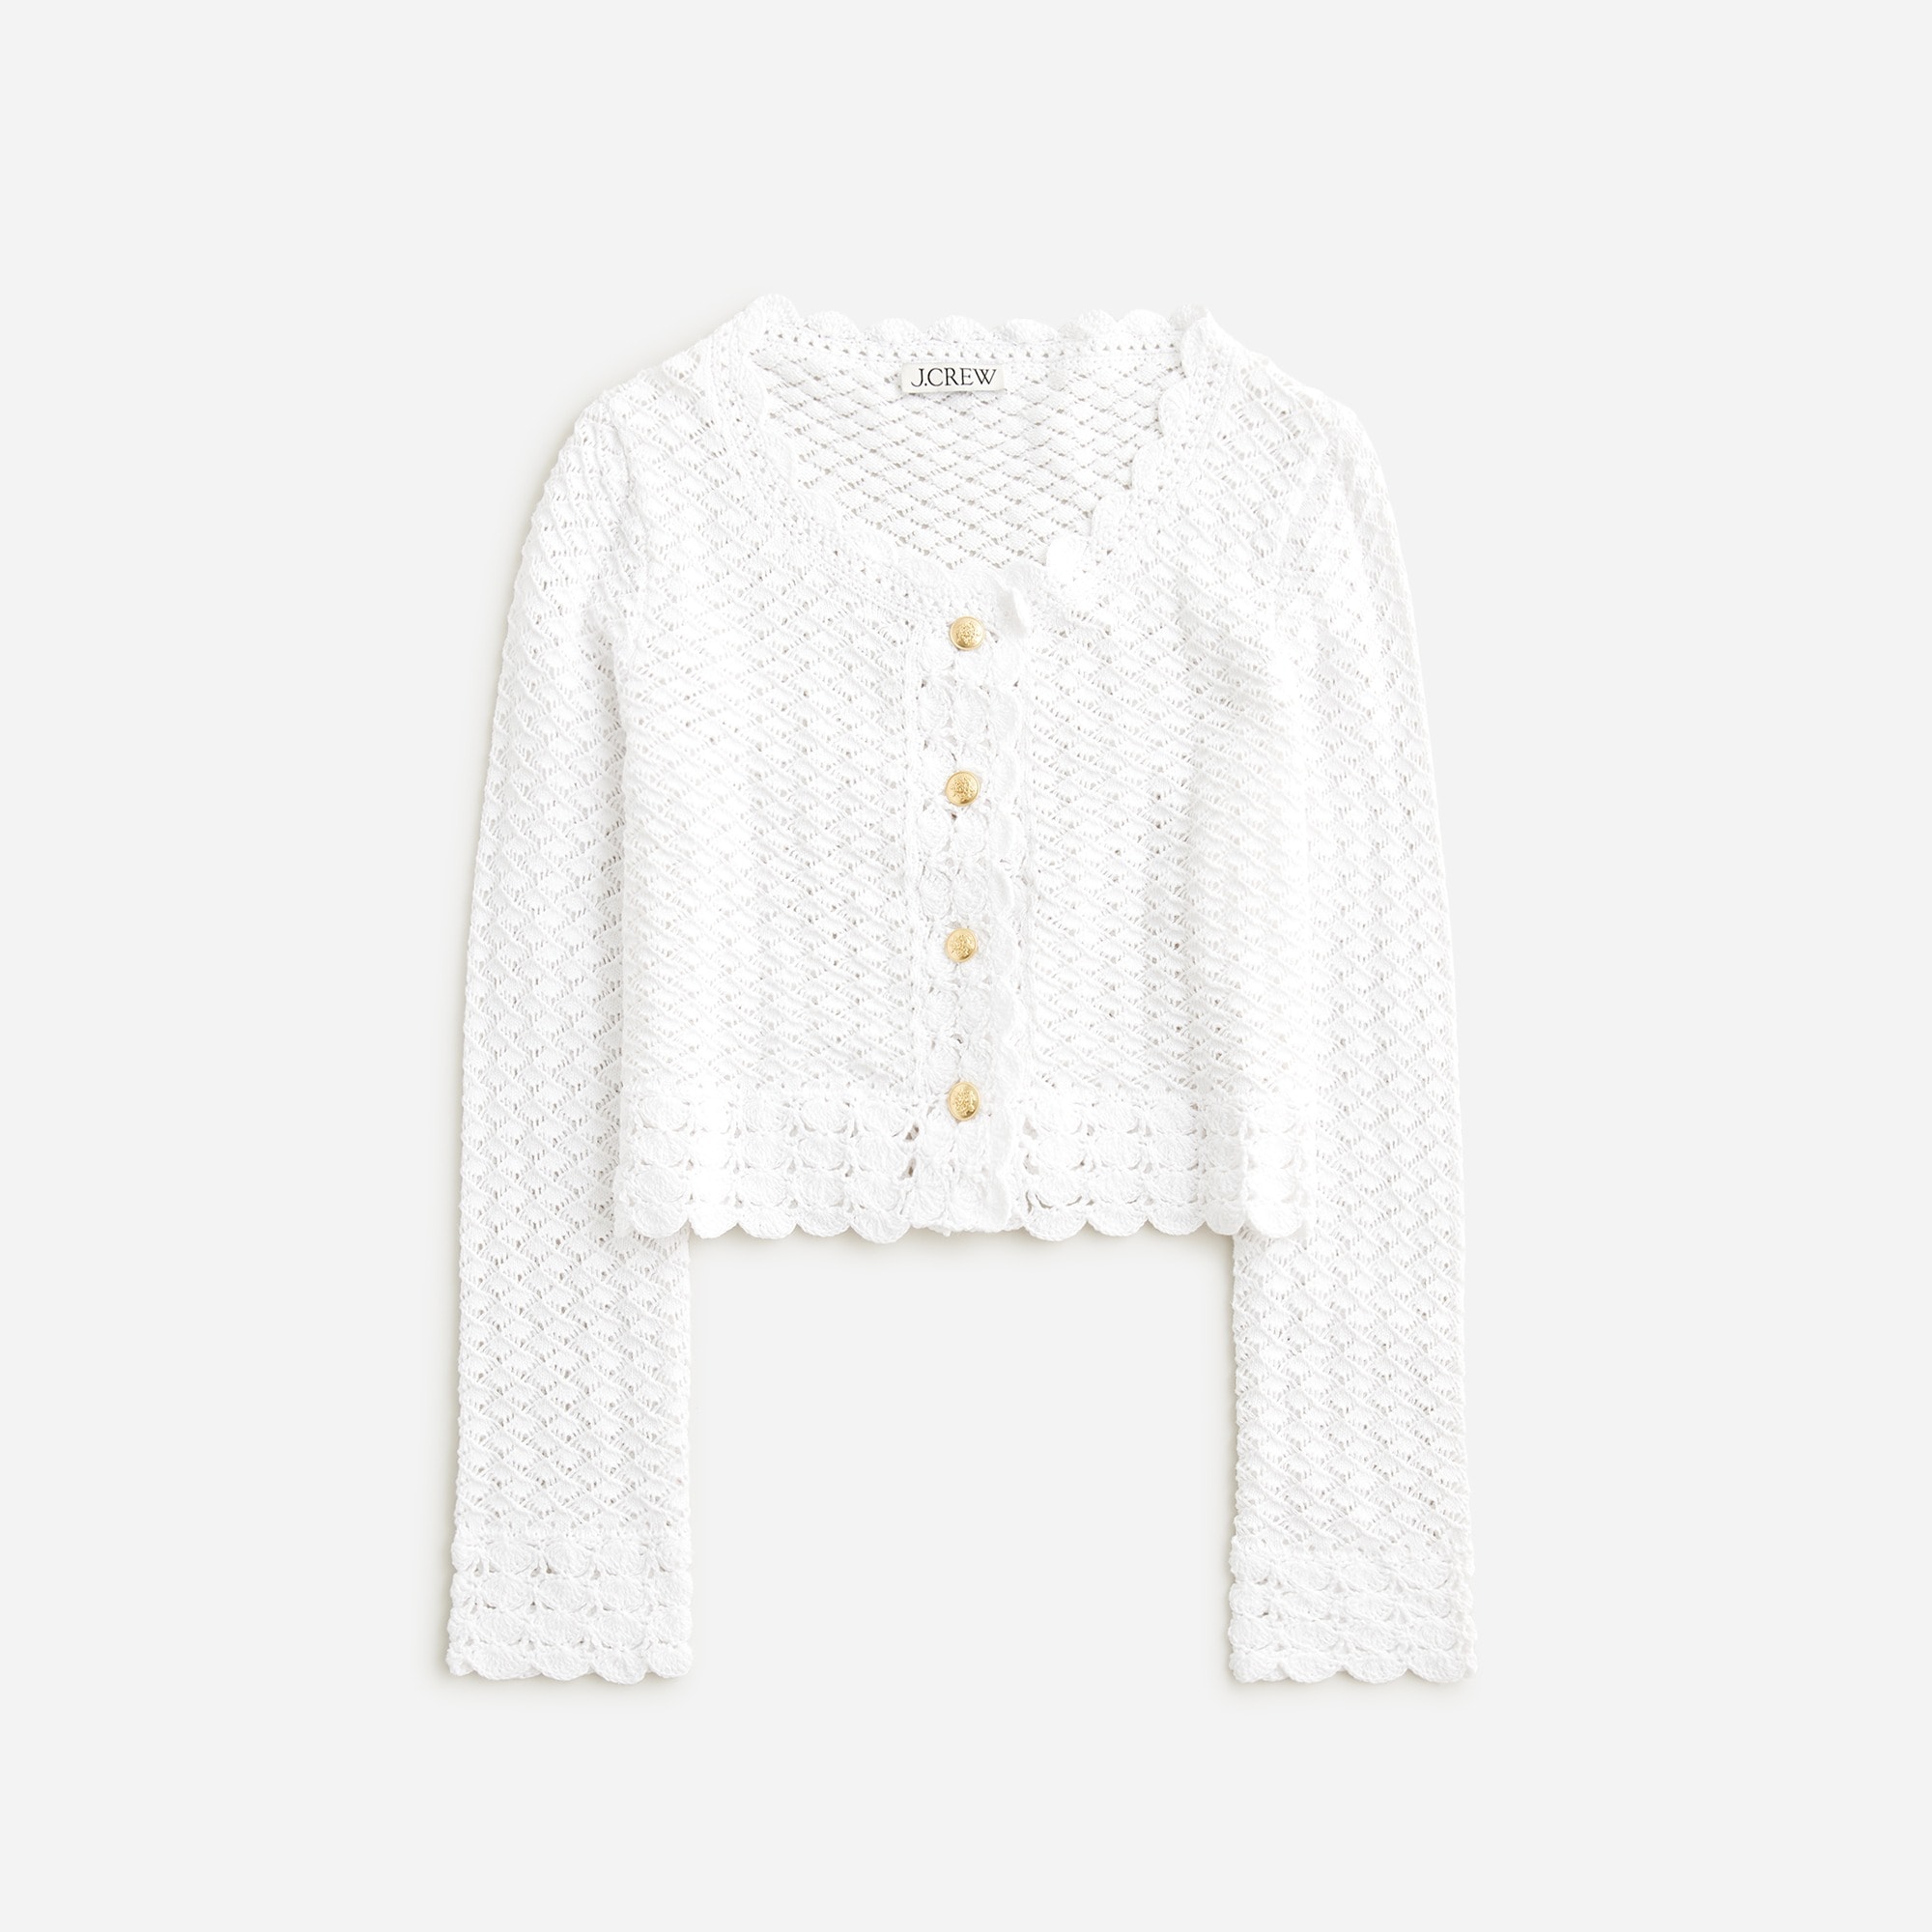  Crochet cropped cardigan sweater